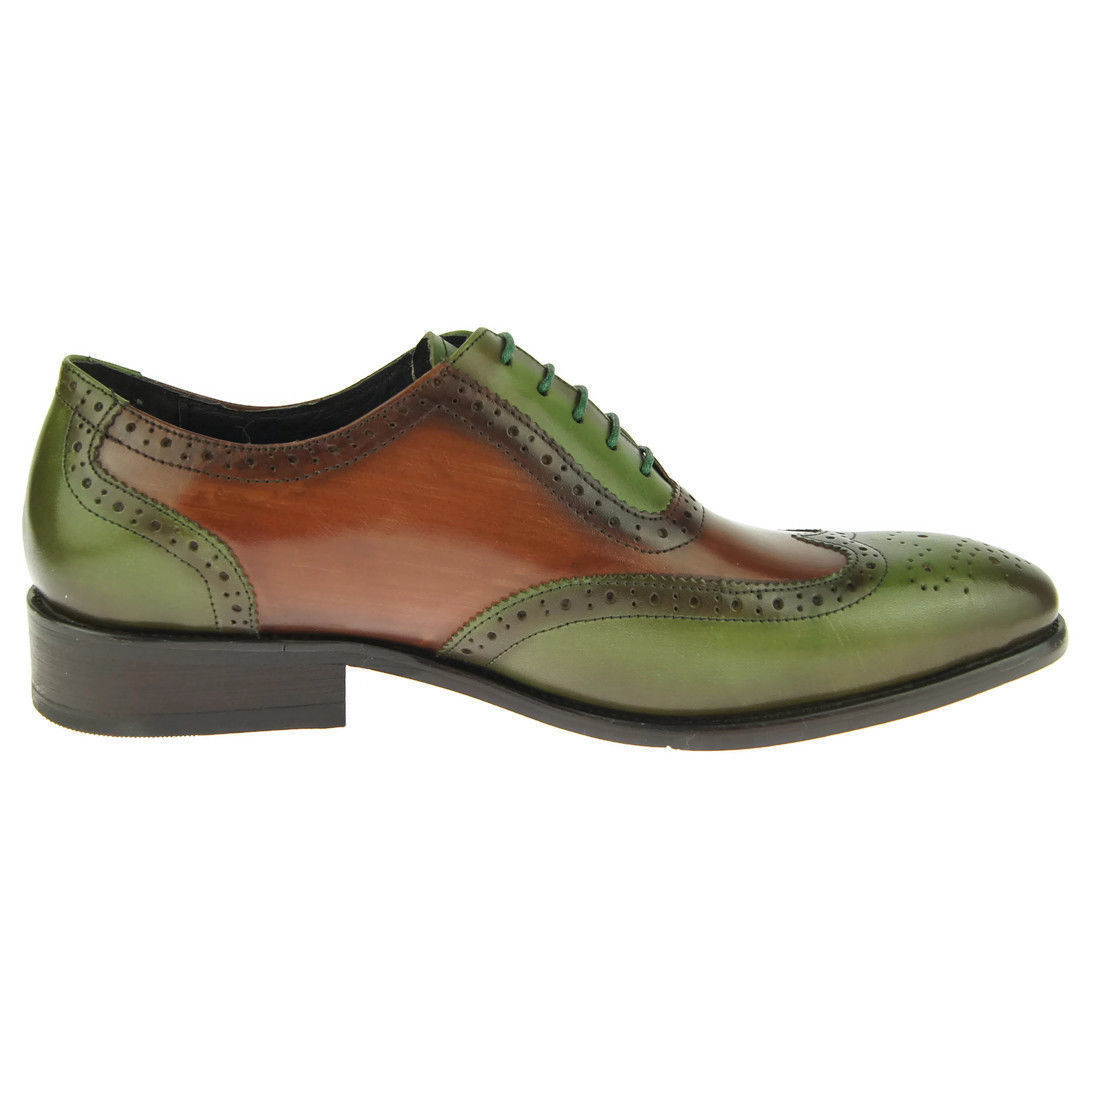 Handmade Men's Genuine Green & Brown Leather Oxford Brogue Formal Wingtip Shoes